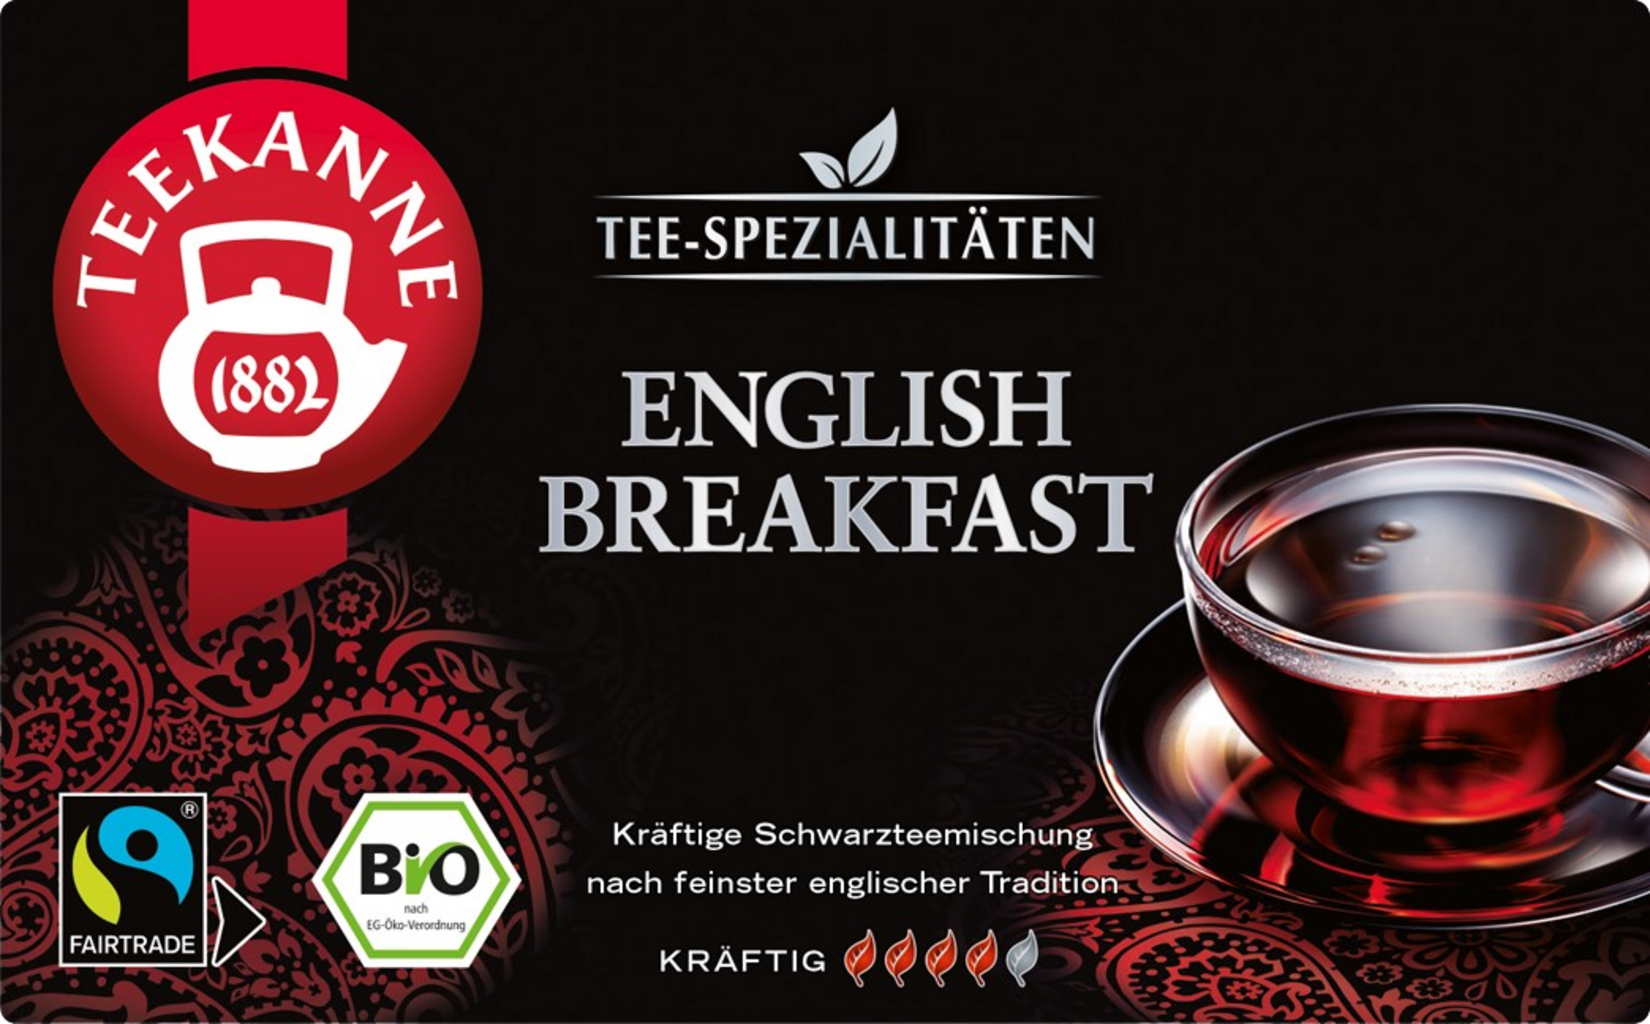 TEEKANNE English Breakfast Specialty Tea - Organic, Fairtrade & RFA, 35 g -  Piccantino